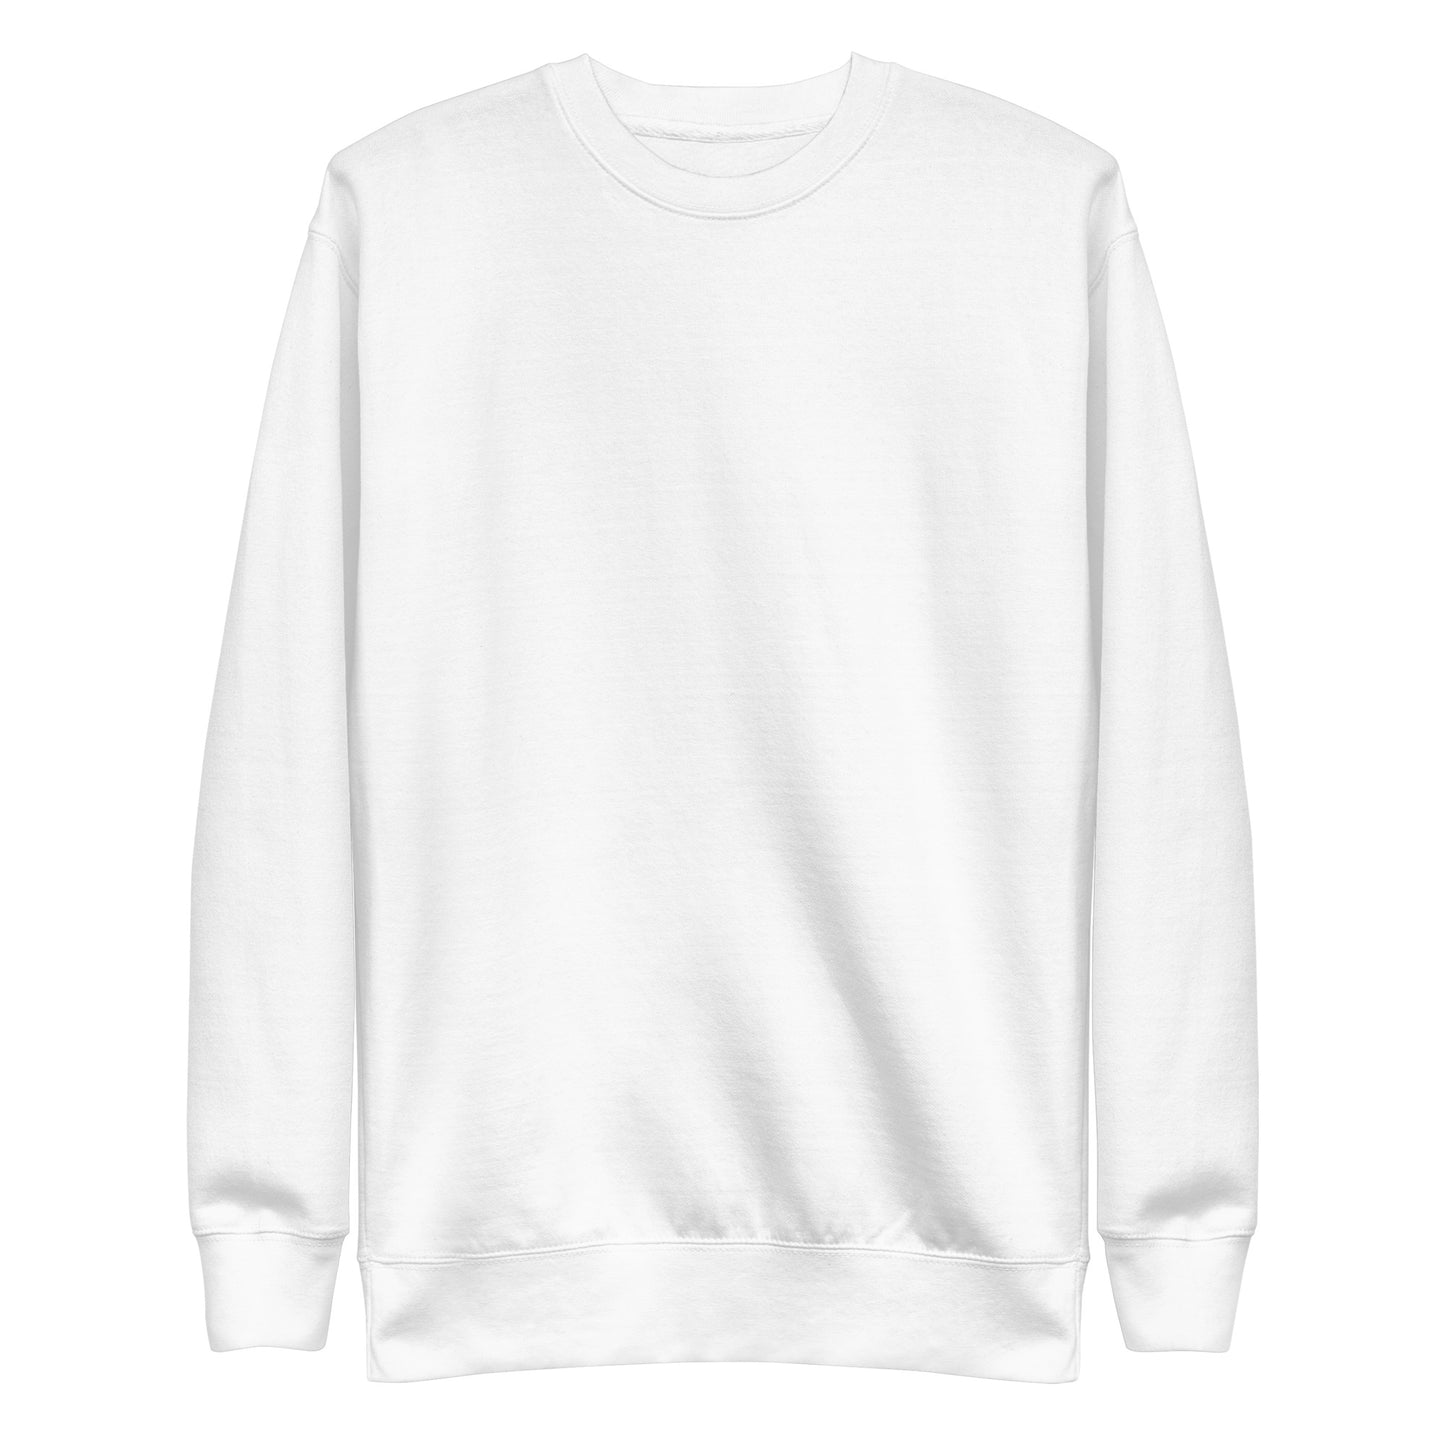 Adult Unisex "Confidence" Sweatshirt